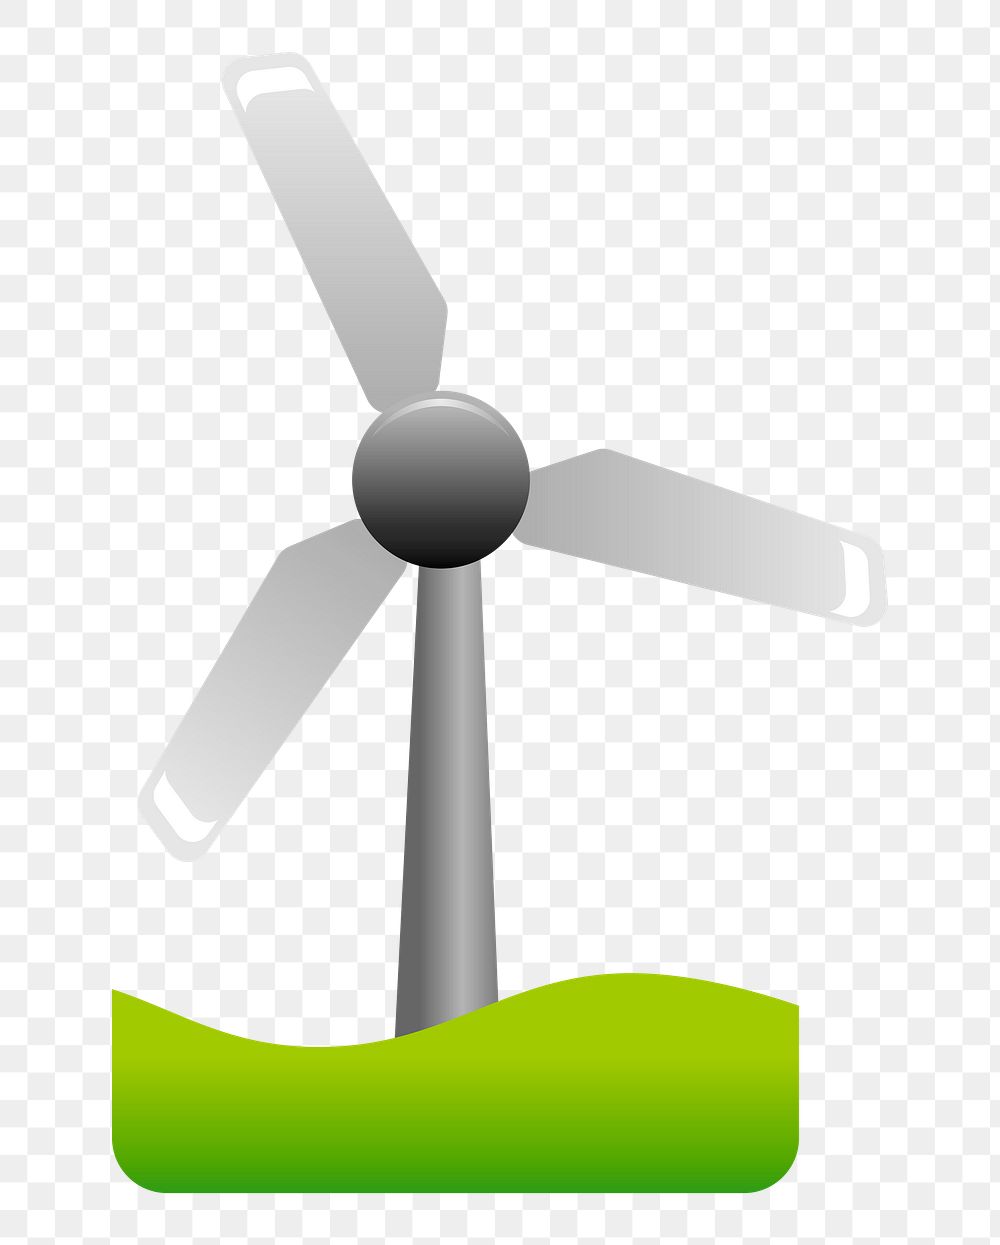 Wind turbine png sticker, transparent background. Free public domain CC0 image.